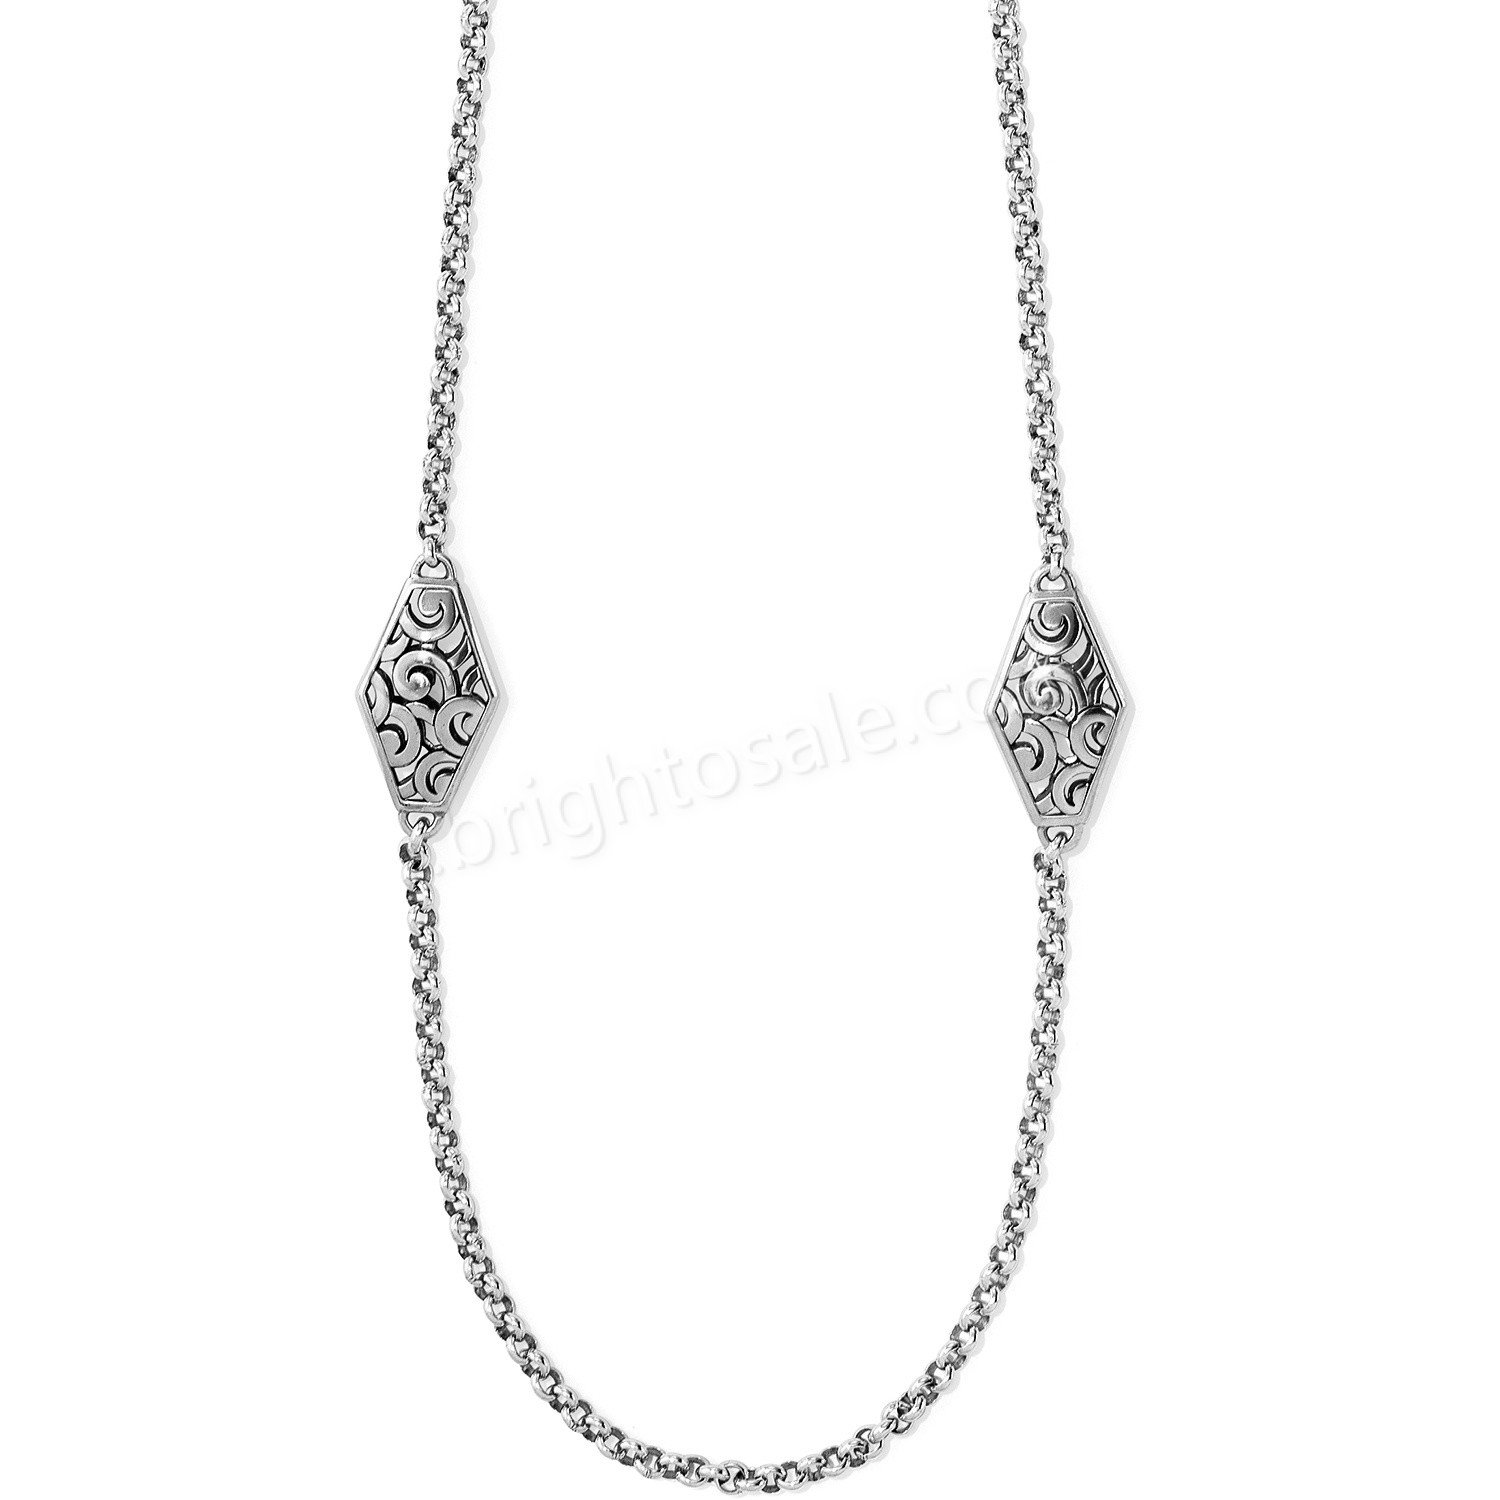 Brighton Collectibles & Online Discount Illumina Long Necklace - Brighton Collectibles & Online Discount Illumina Long Necklace